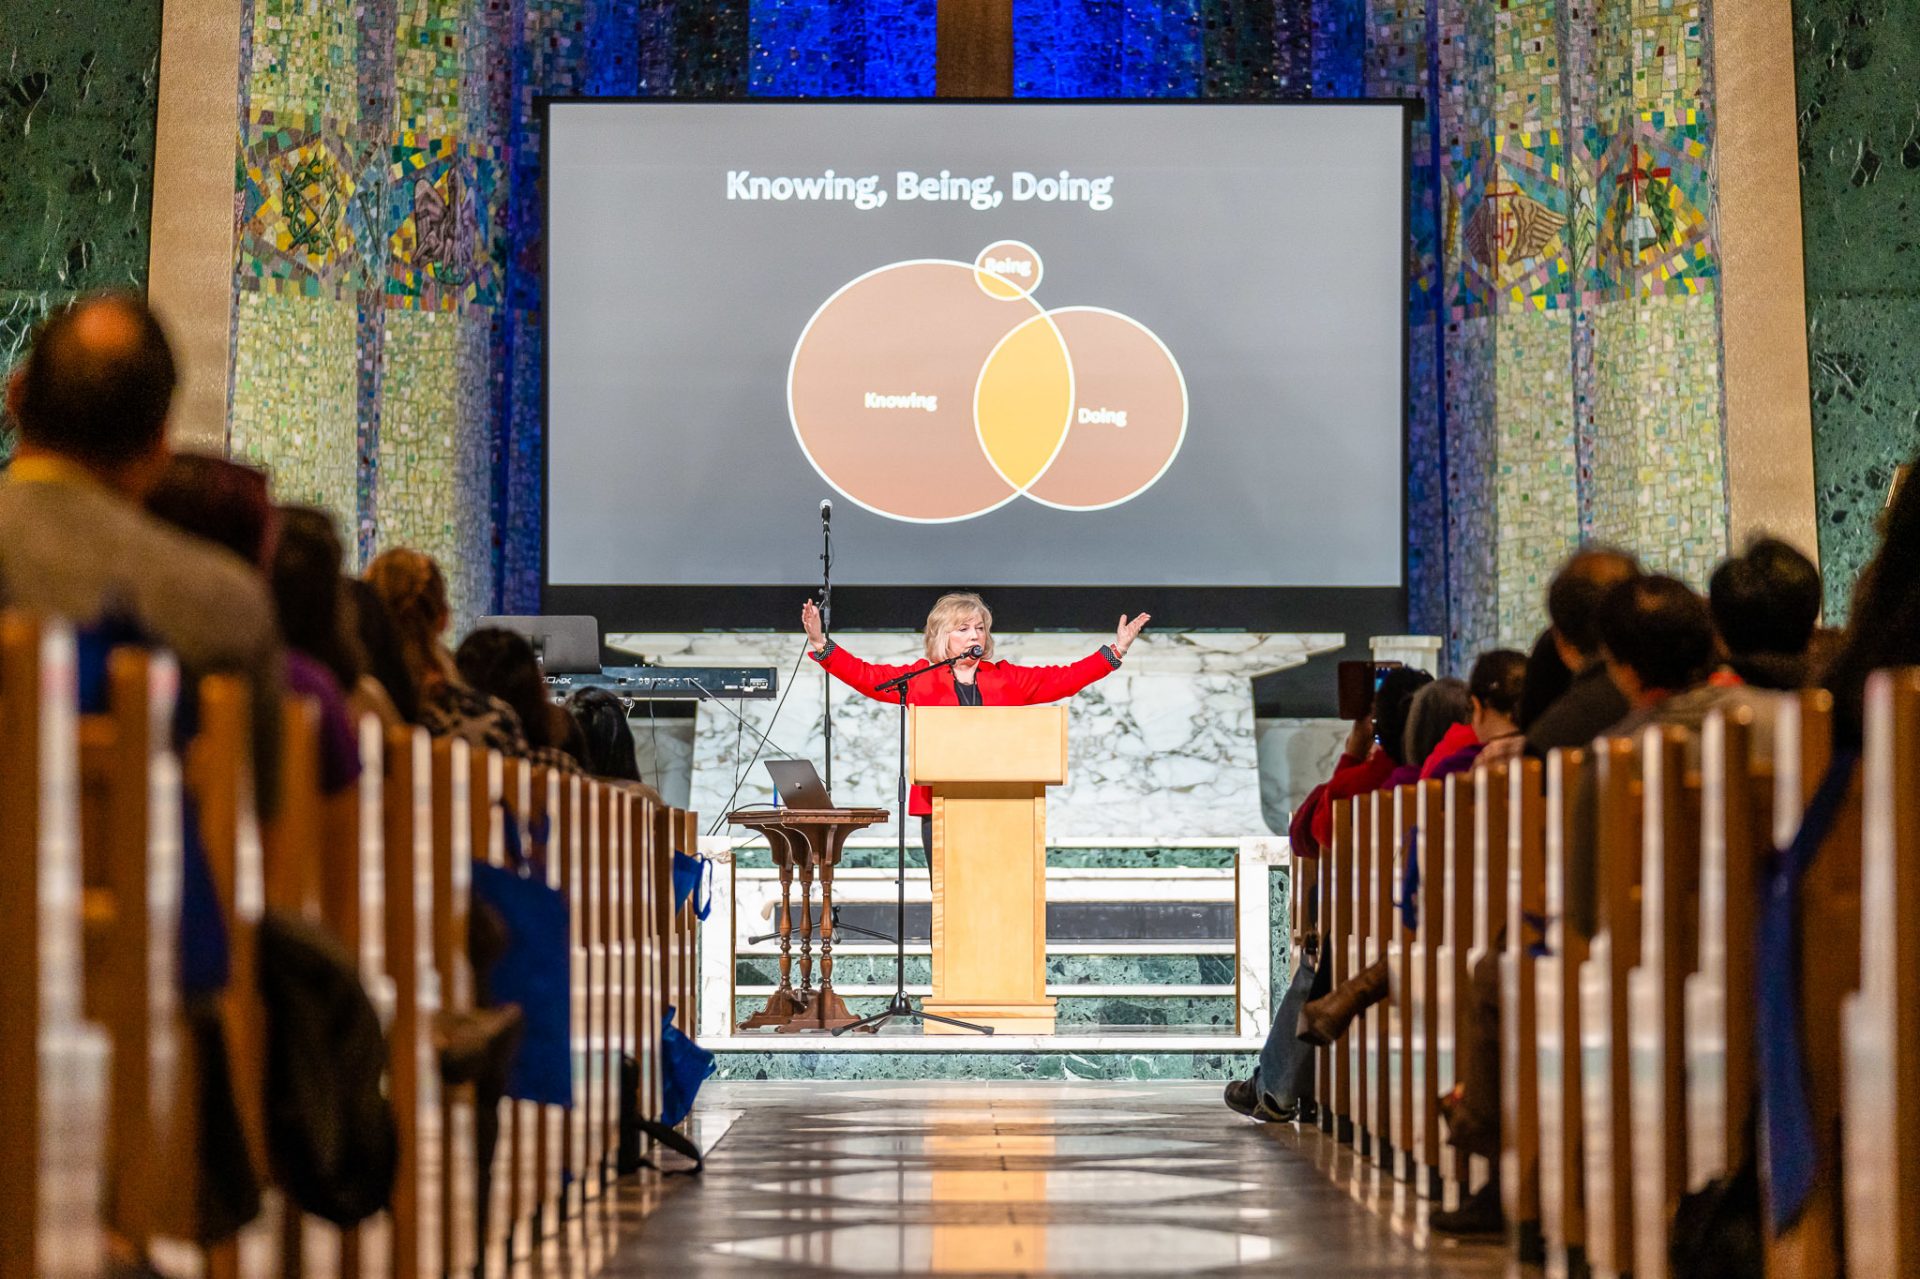 A woman at a pulpit teaches a large congregation.